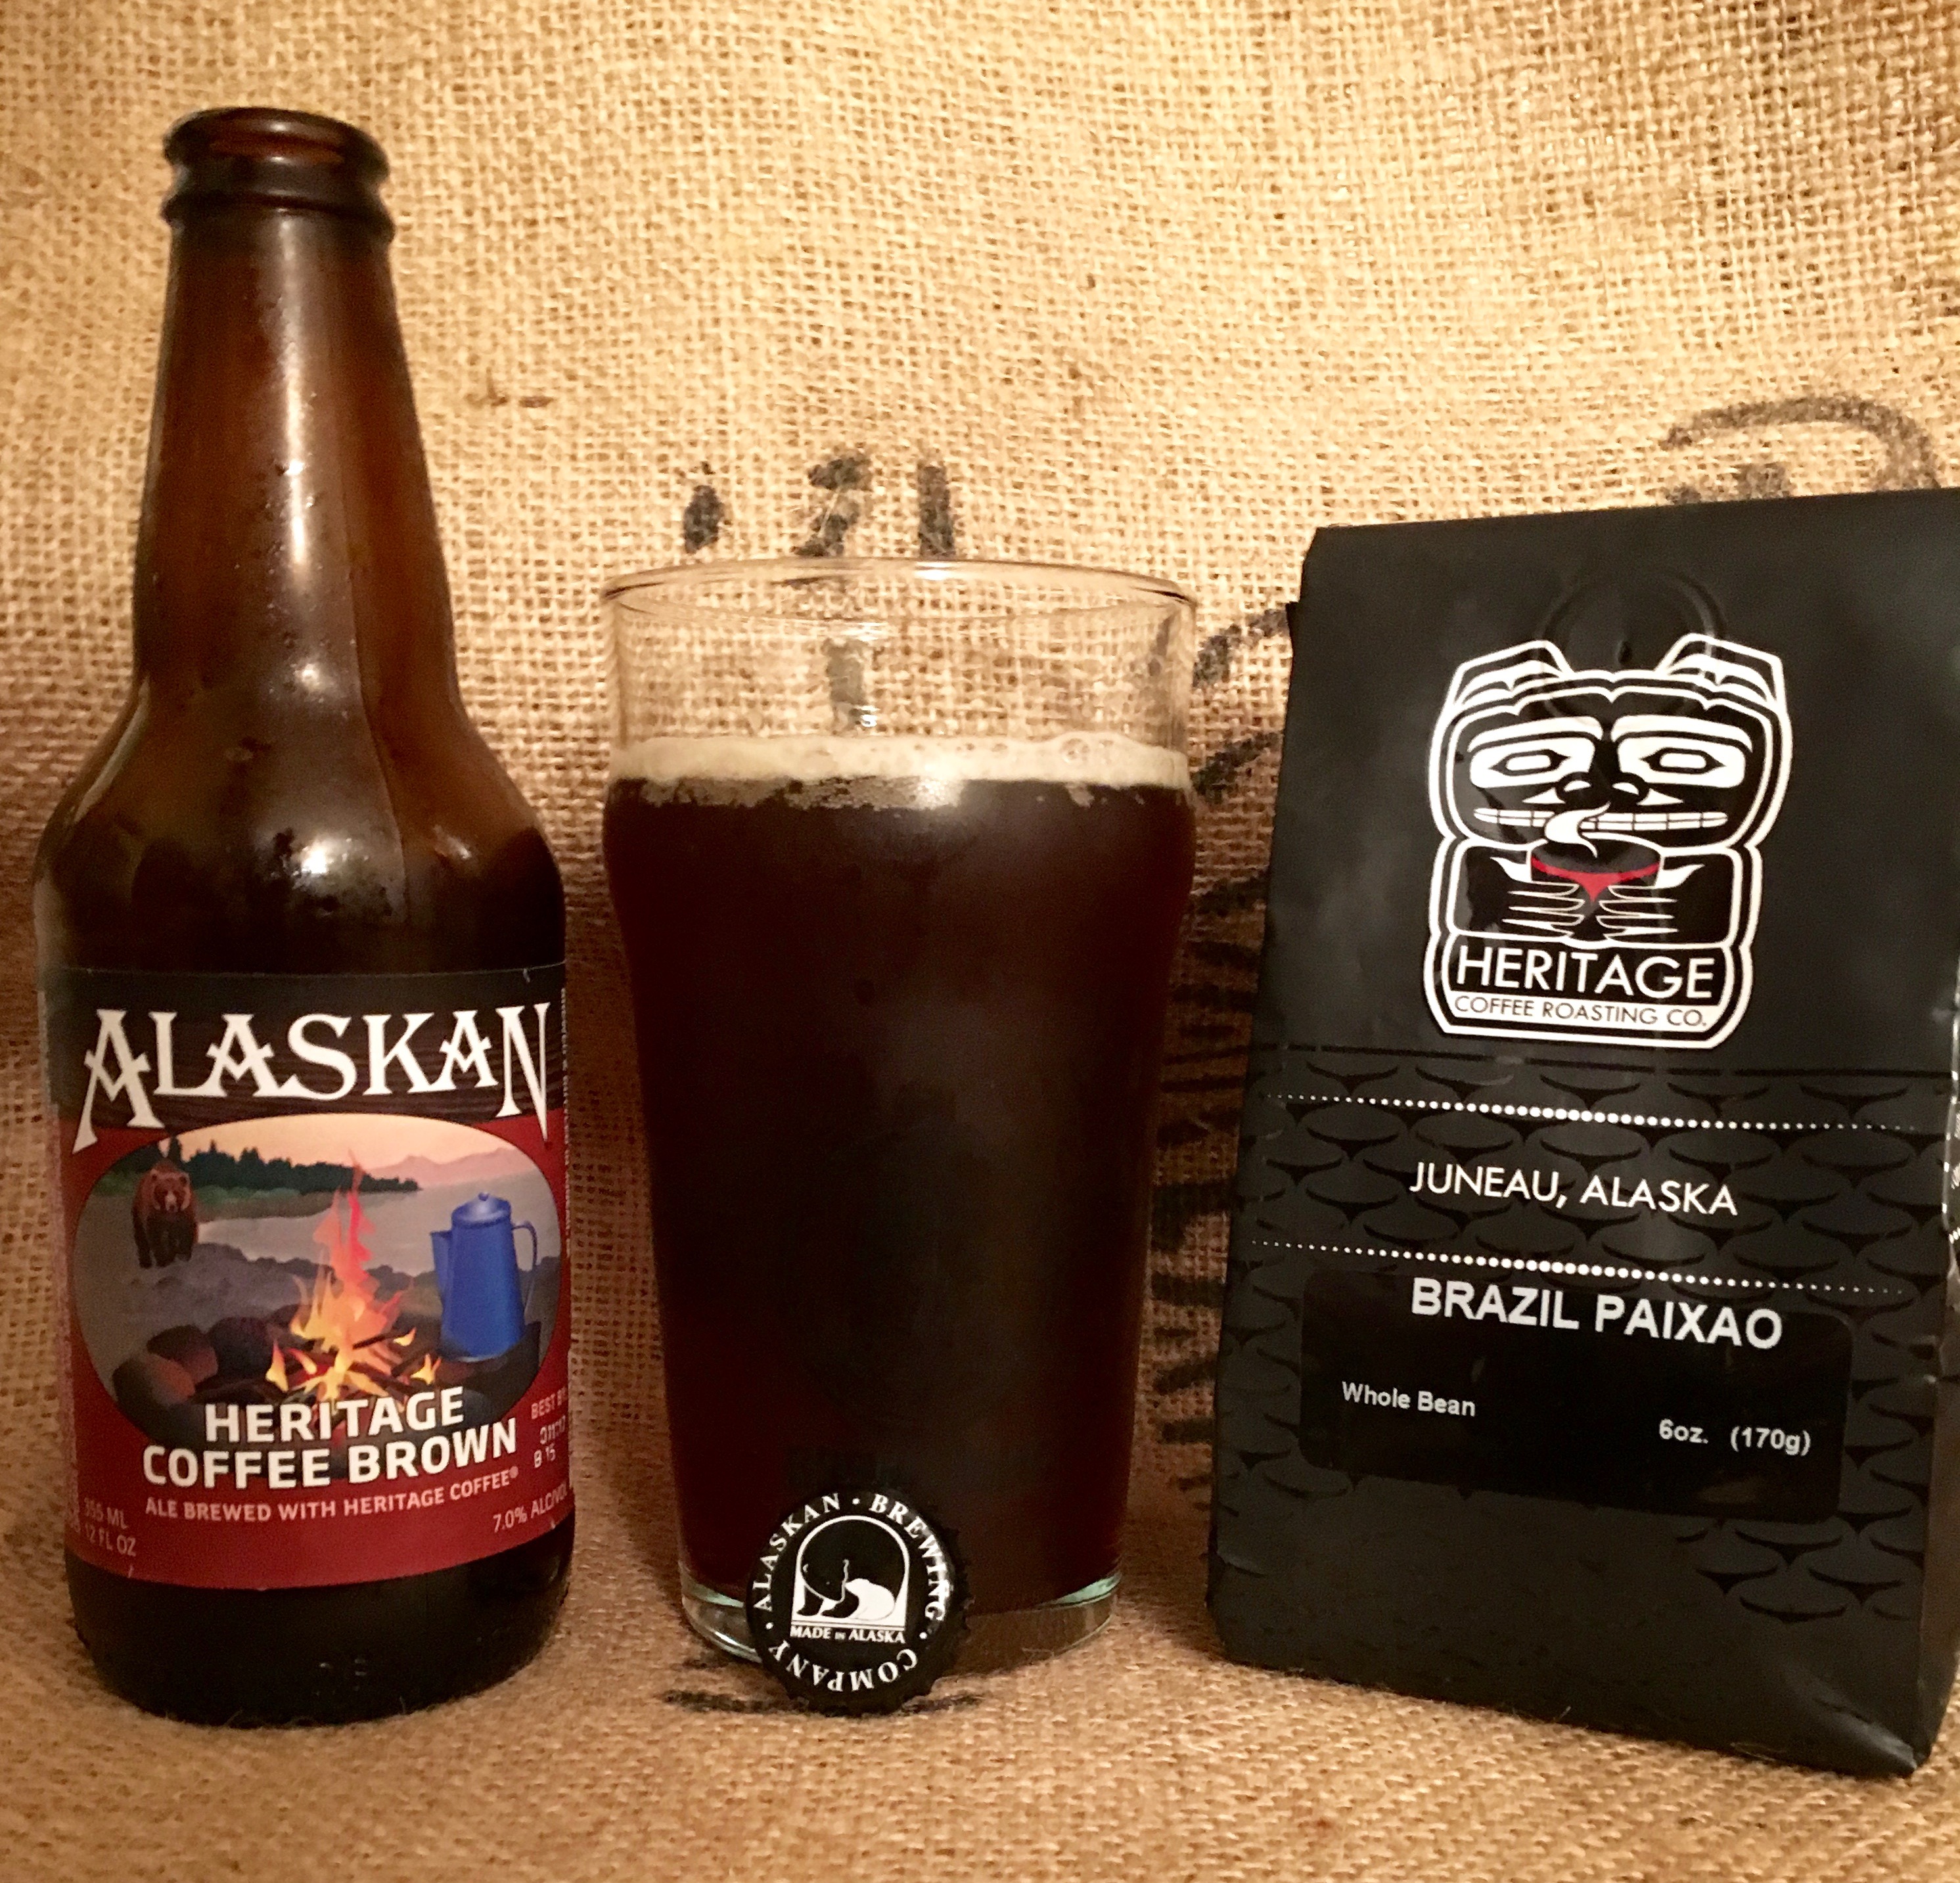 Alaskan Heritage Coffee Brown Ale and a bag of Juneau-based Heritage Coffee Roasting Company.